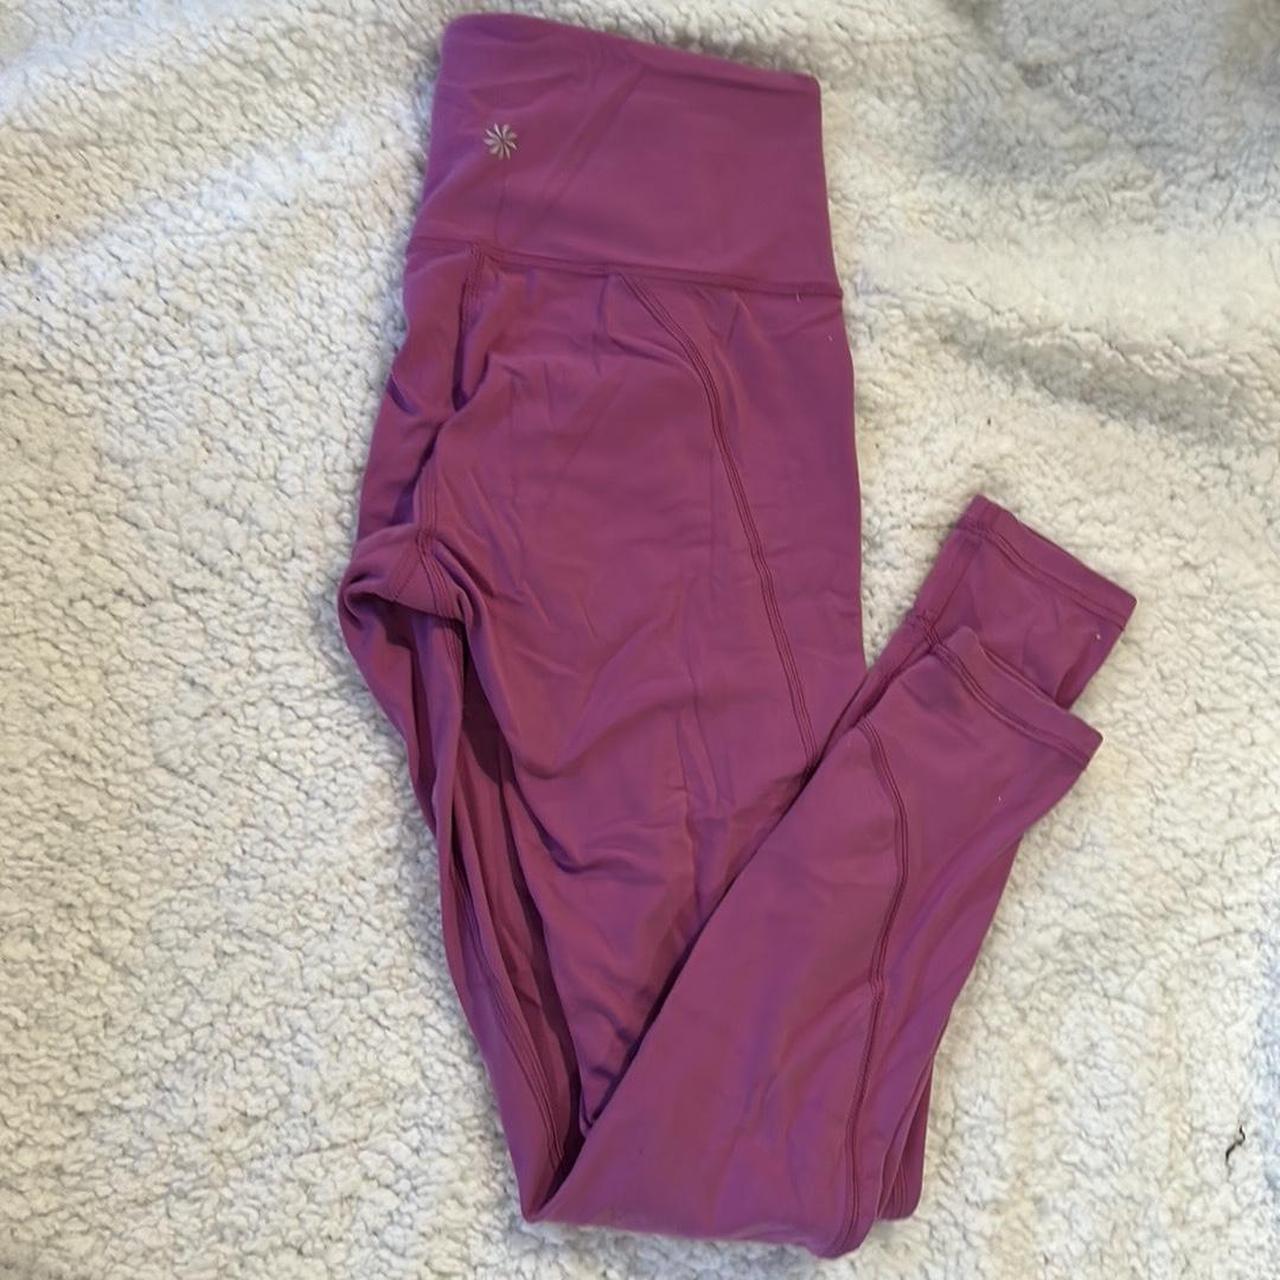 Athleta Women's Pink and Purple Leggings (3)